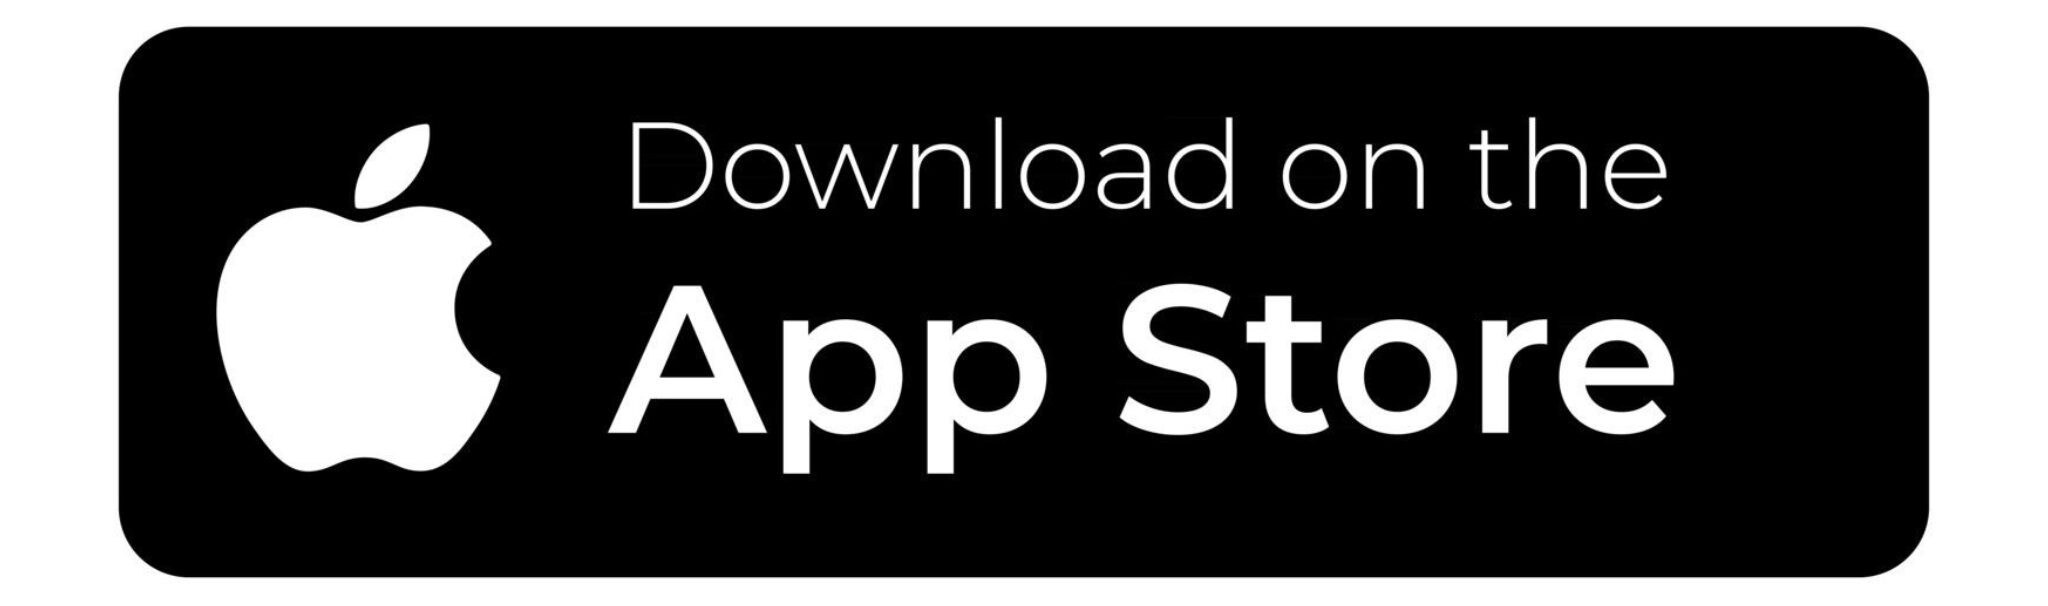 Brick Bodies Apple App Store